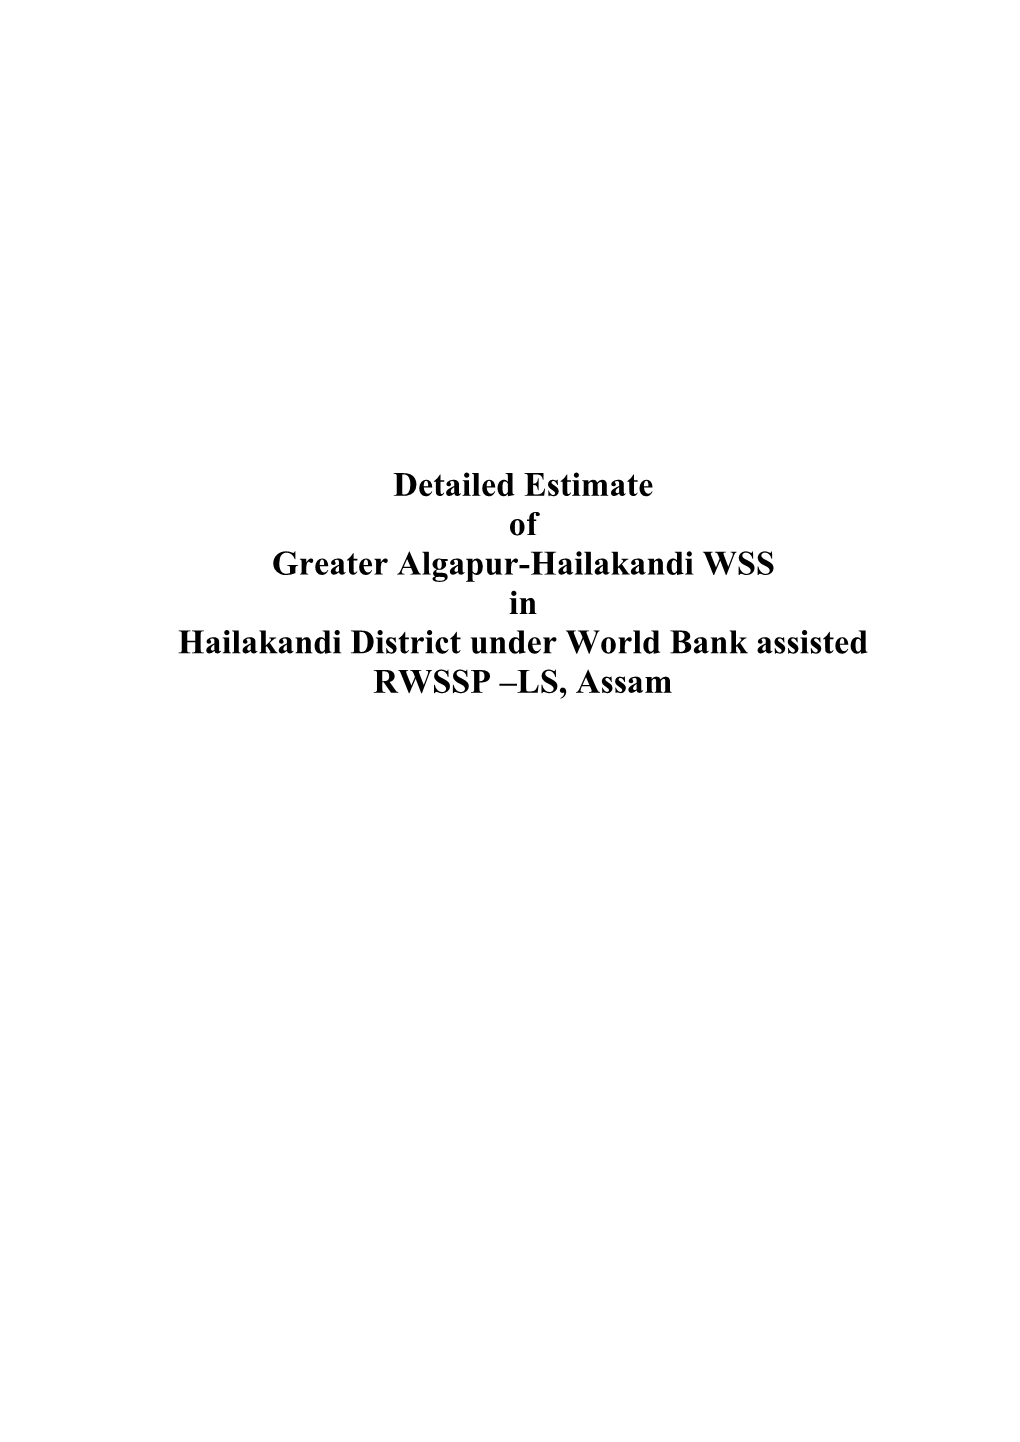 Hailakandi WSS in Hailakandi District Under World Bank Assisted RWSSP –LS, Assam